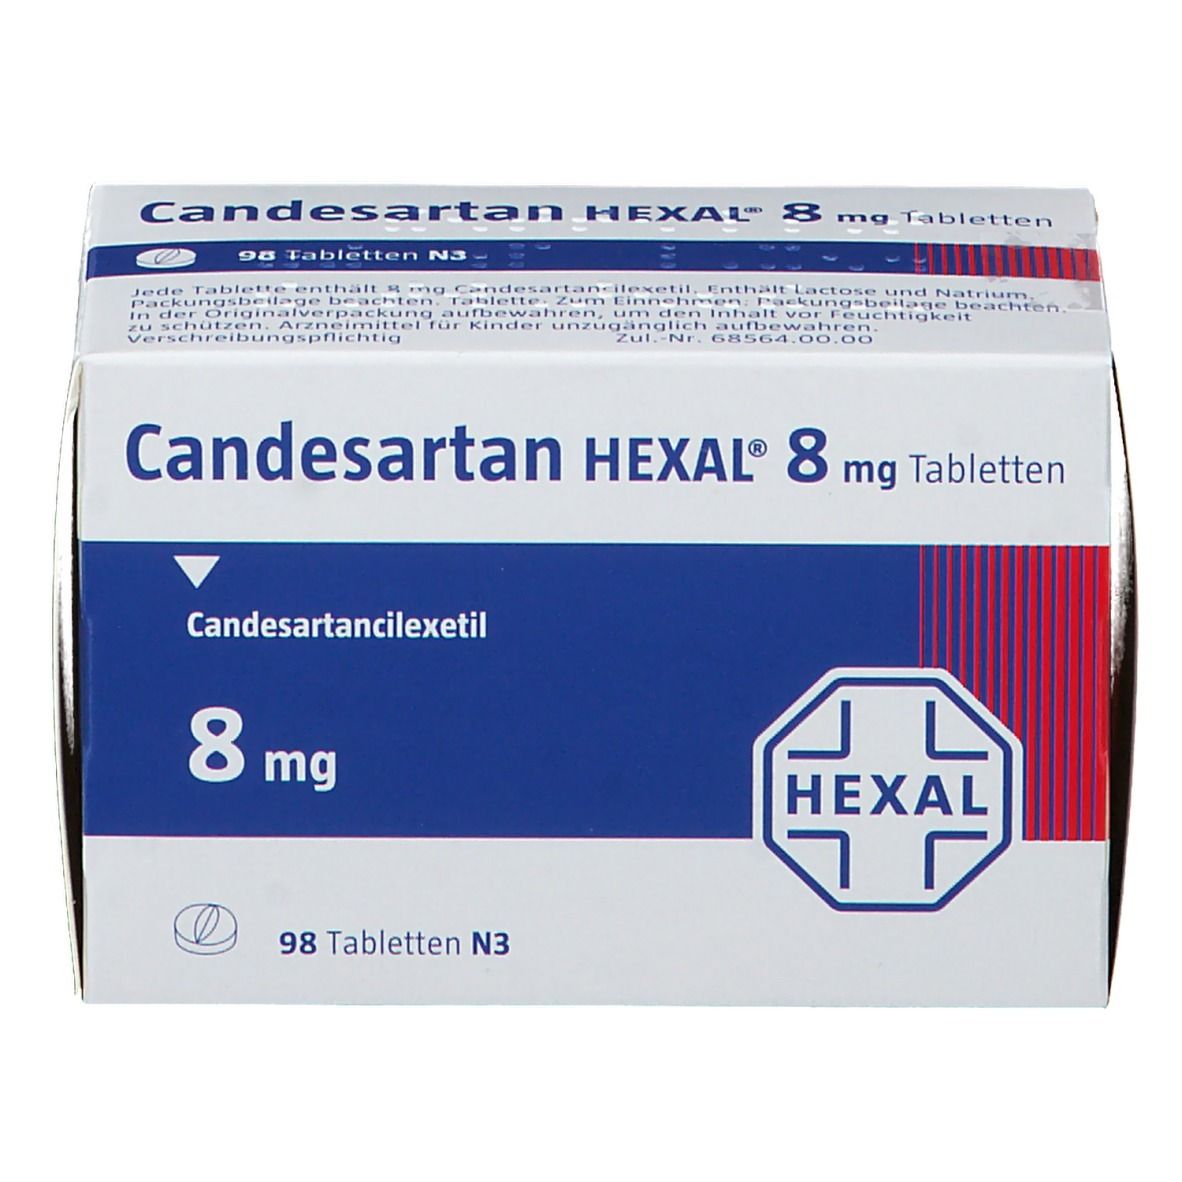 Candesartan HEXAL® 8 mg